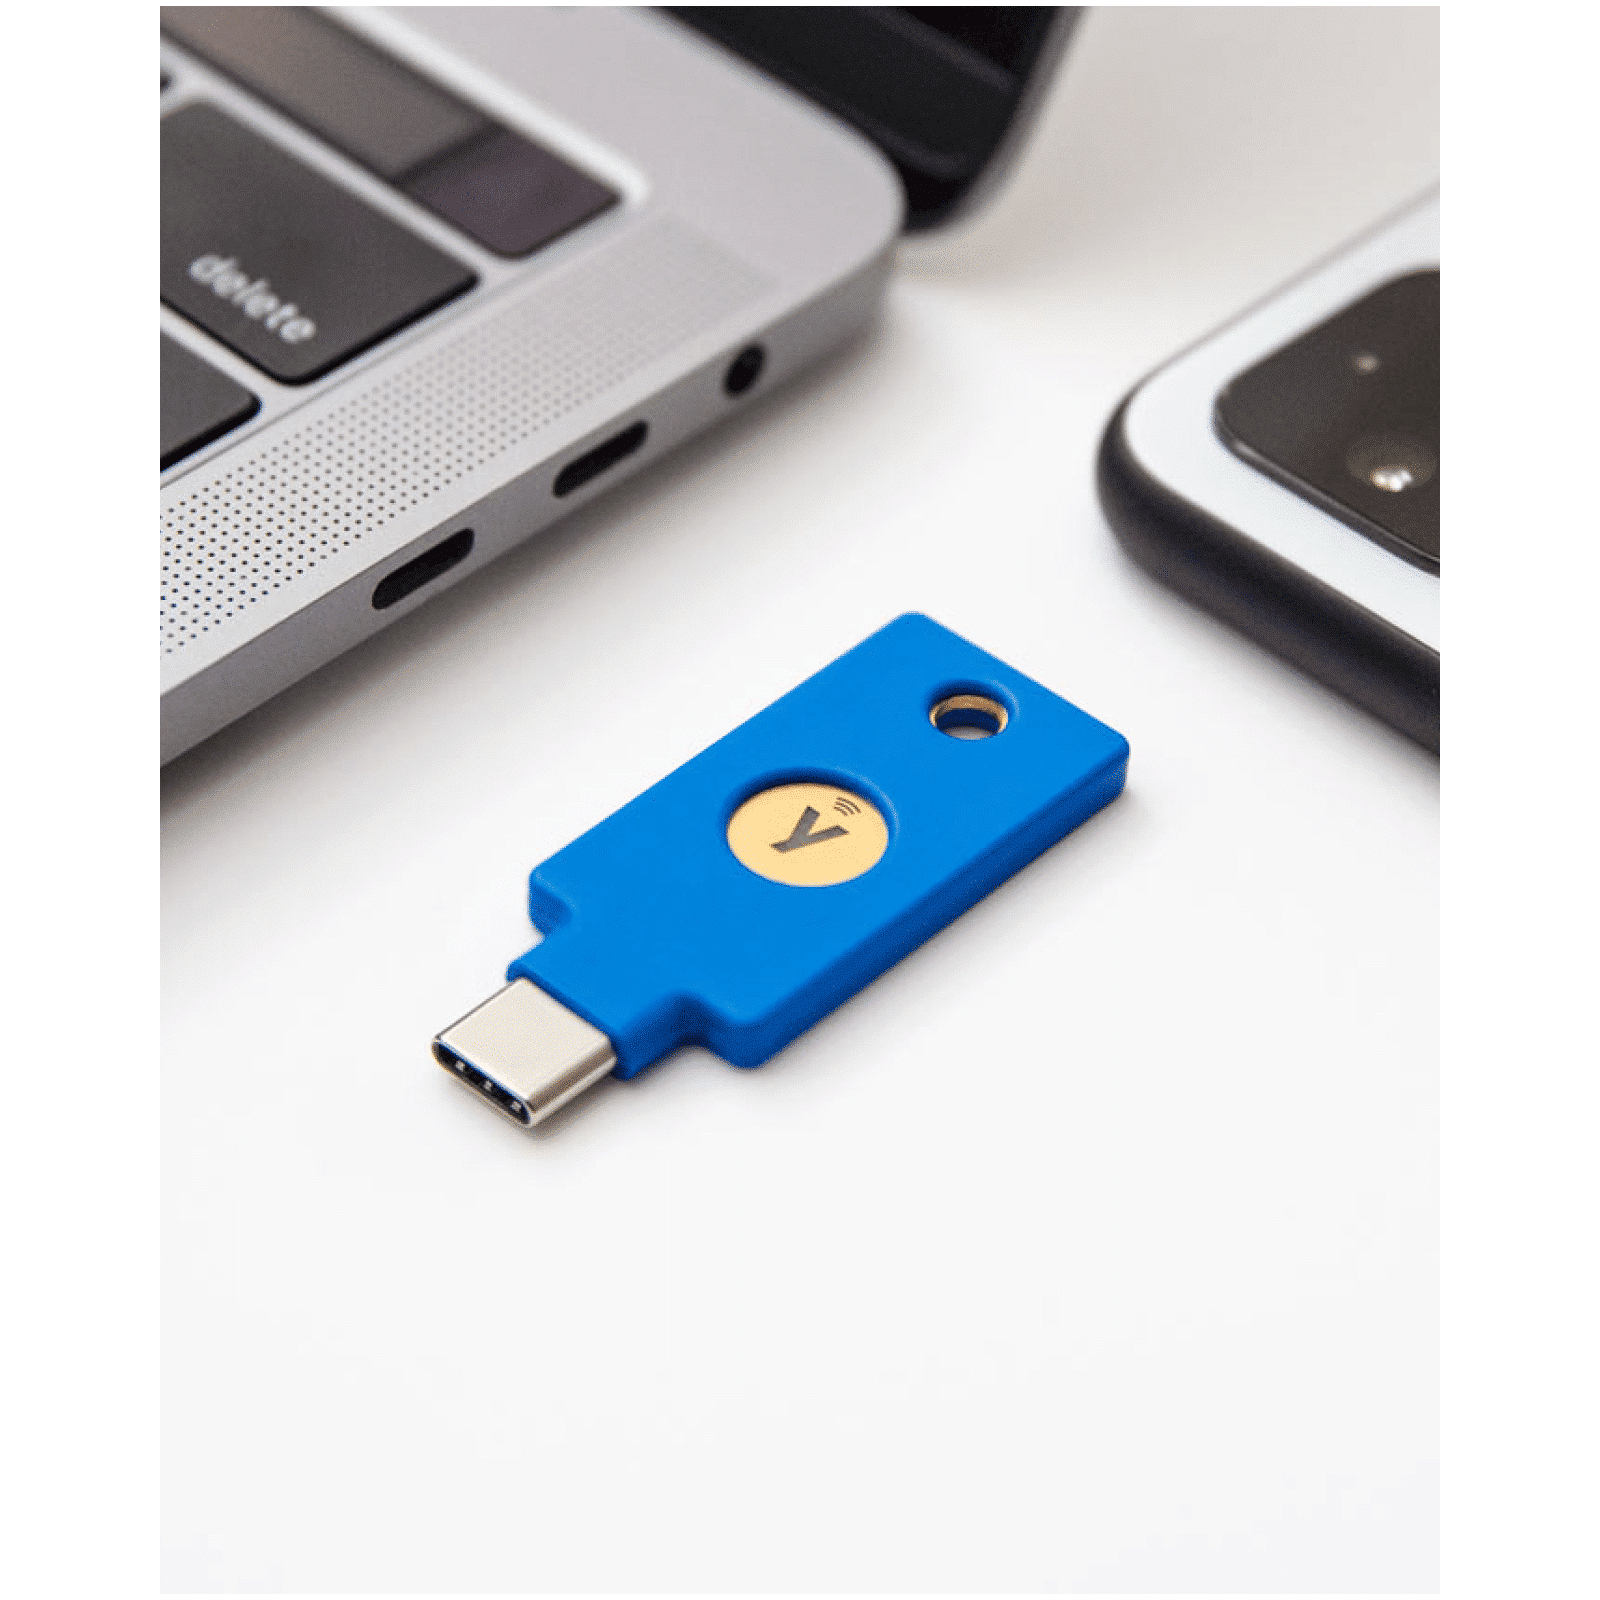 Апаратний ключ безпеки Yubico Security Key C NFC (SecurityKey_C_NFC) зображення 3